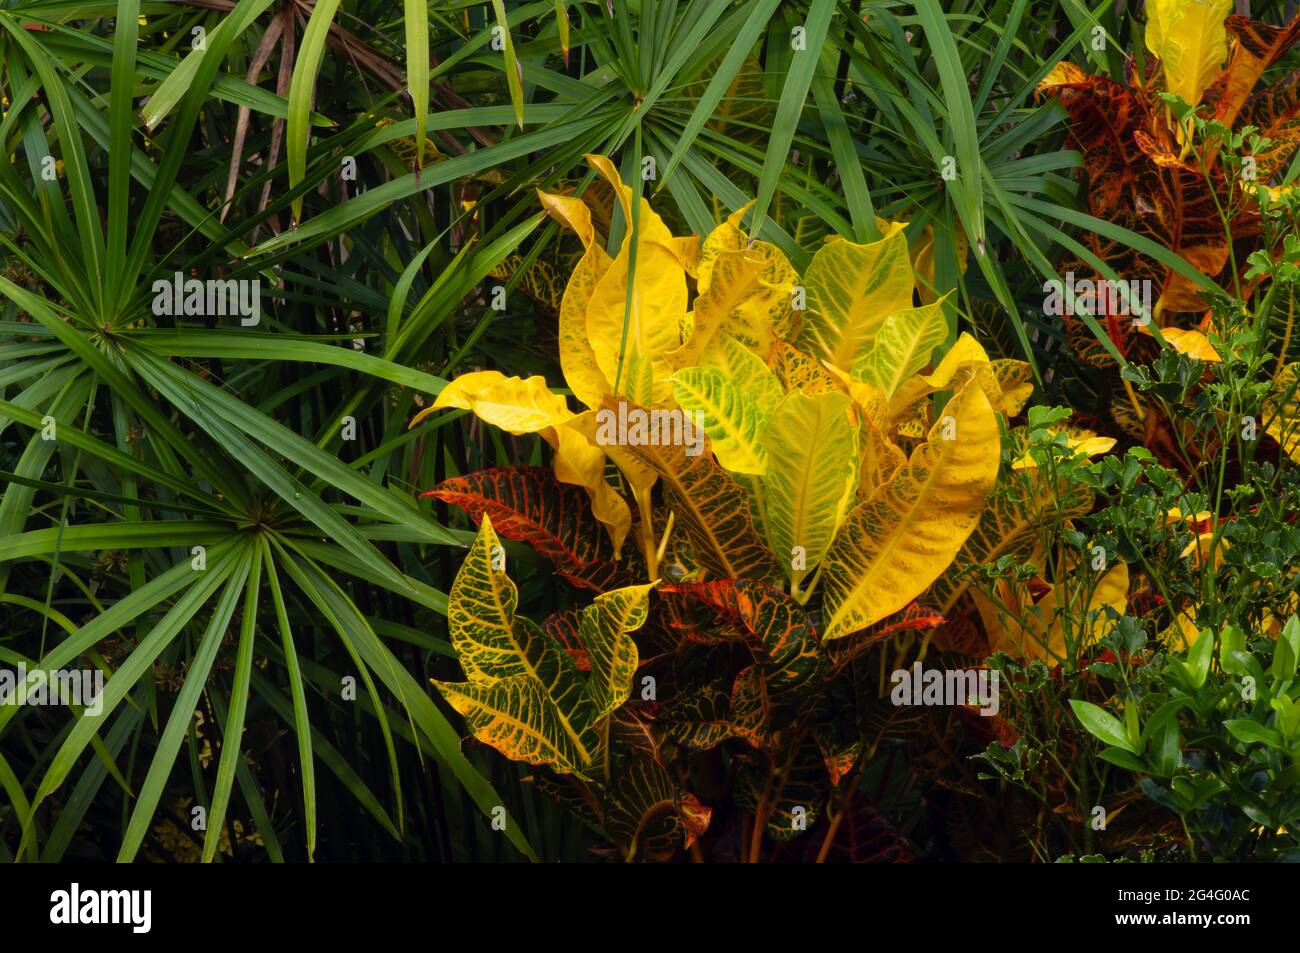 Croton (Codiaeum variegatum) and Cyperus Alternifolius (Umbrella Papyrus), selected focus, a popular houseplant with many varieties and pretty colorfu Stock Photo